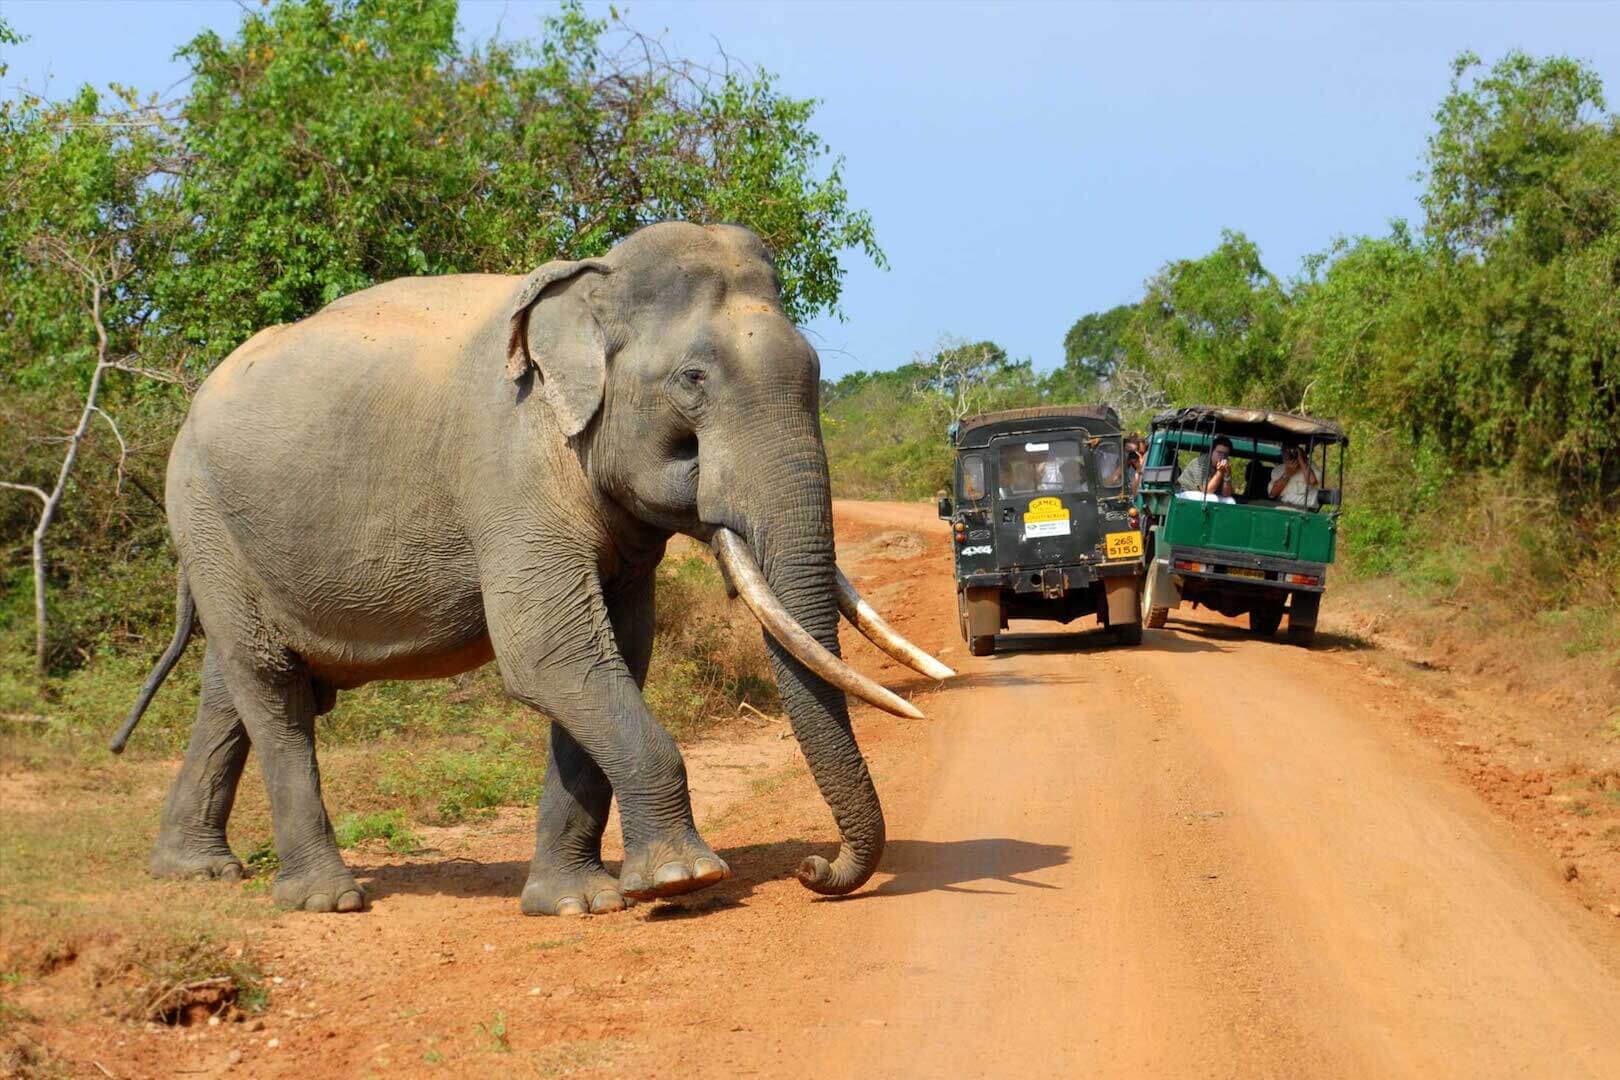 The Elephant Cross The Path of Safari Jeep